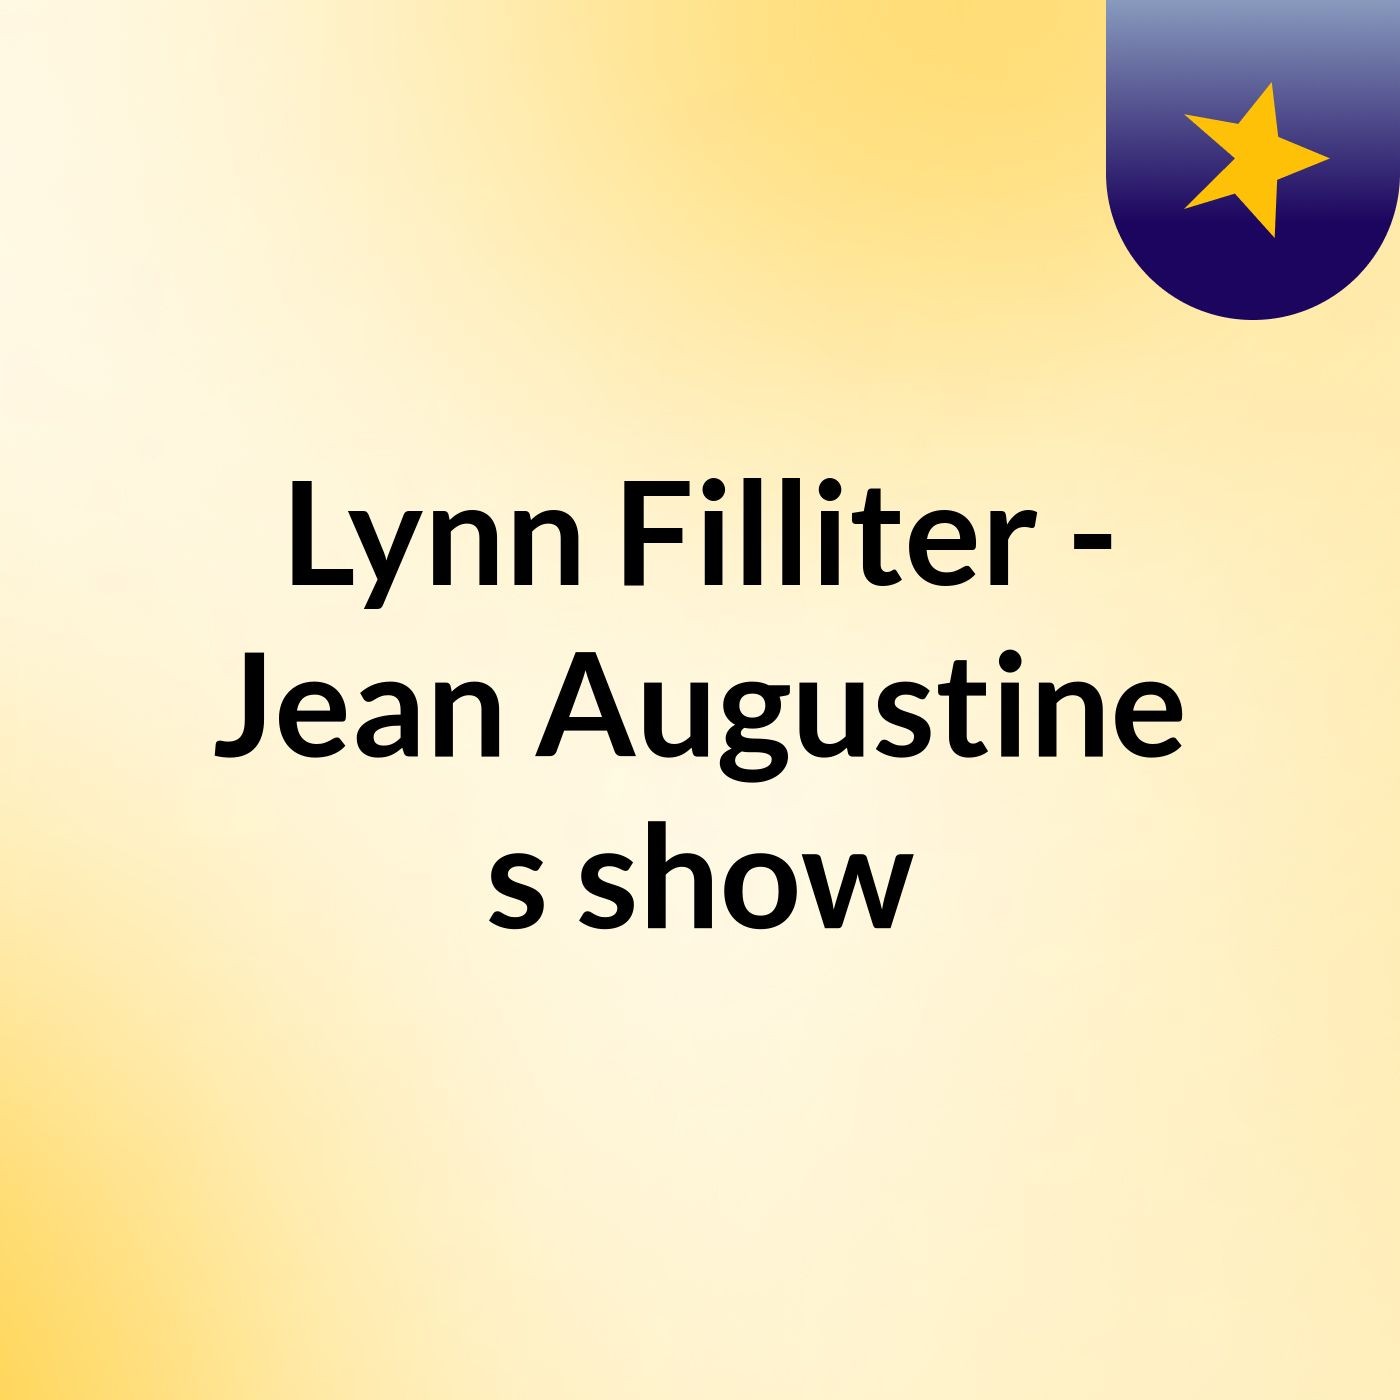 Lynn Filliter - Jean Augustine's show